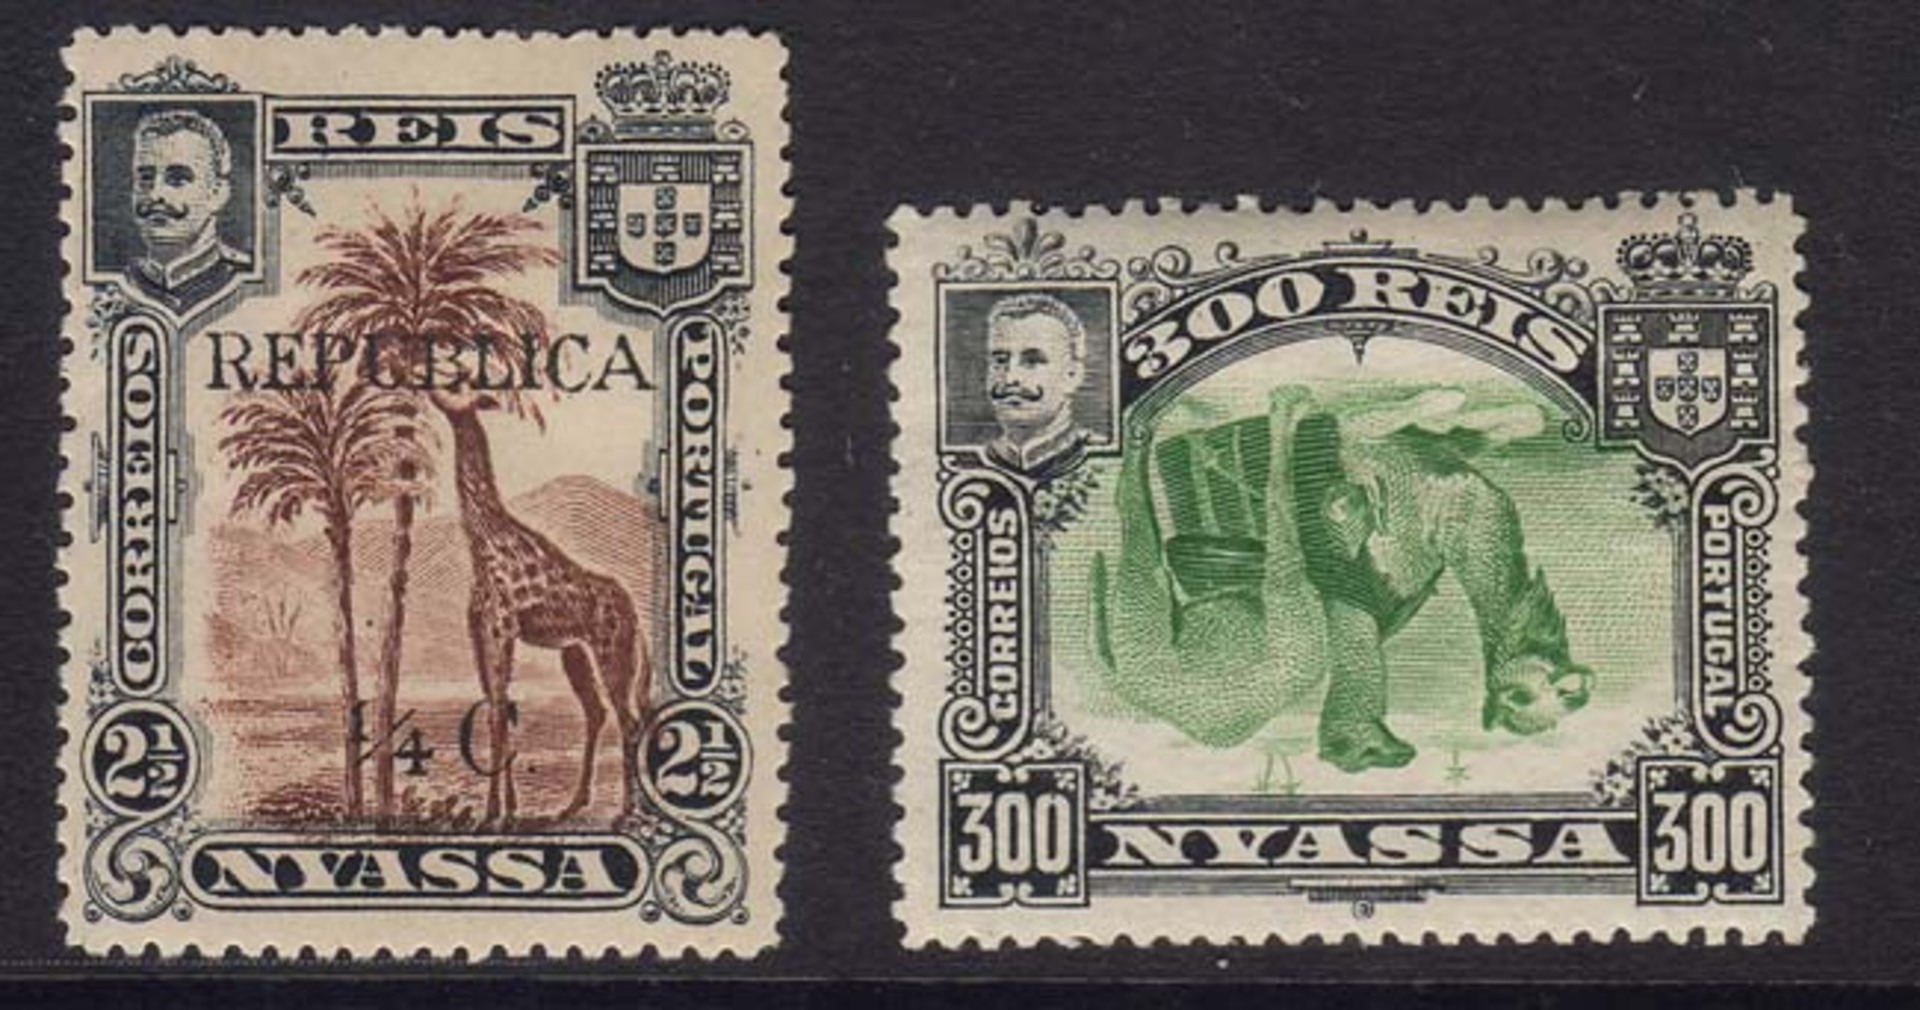 The Nyassa Company 1893-1929 stamps